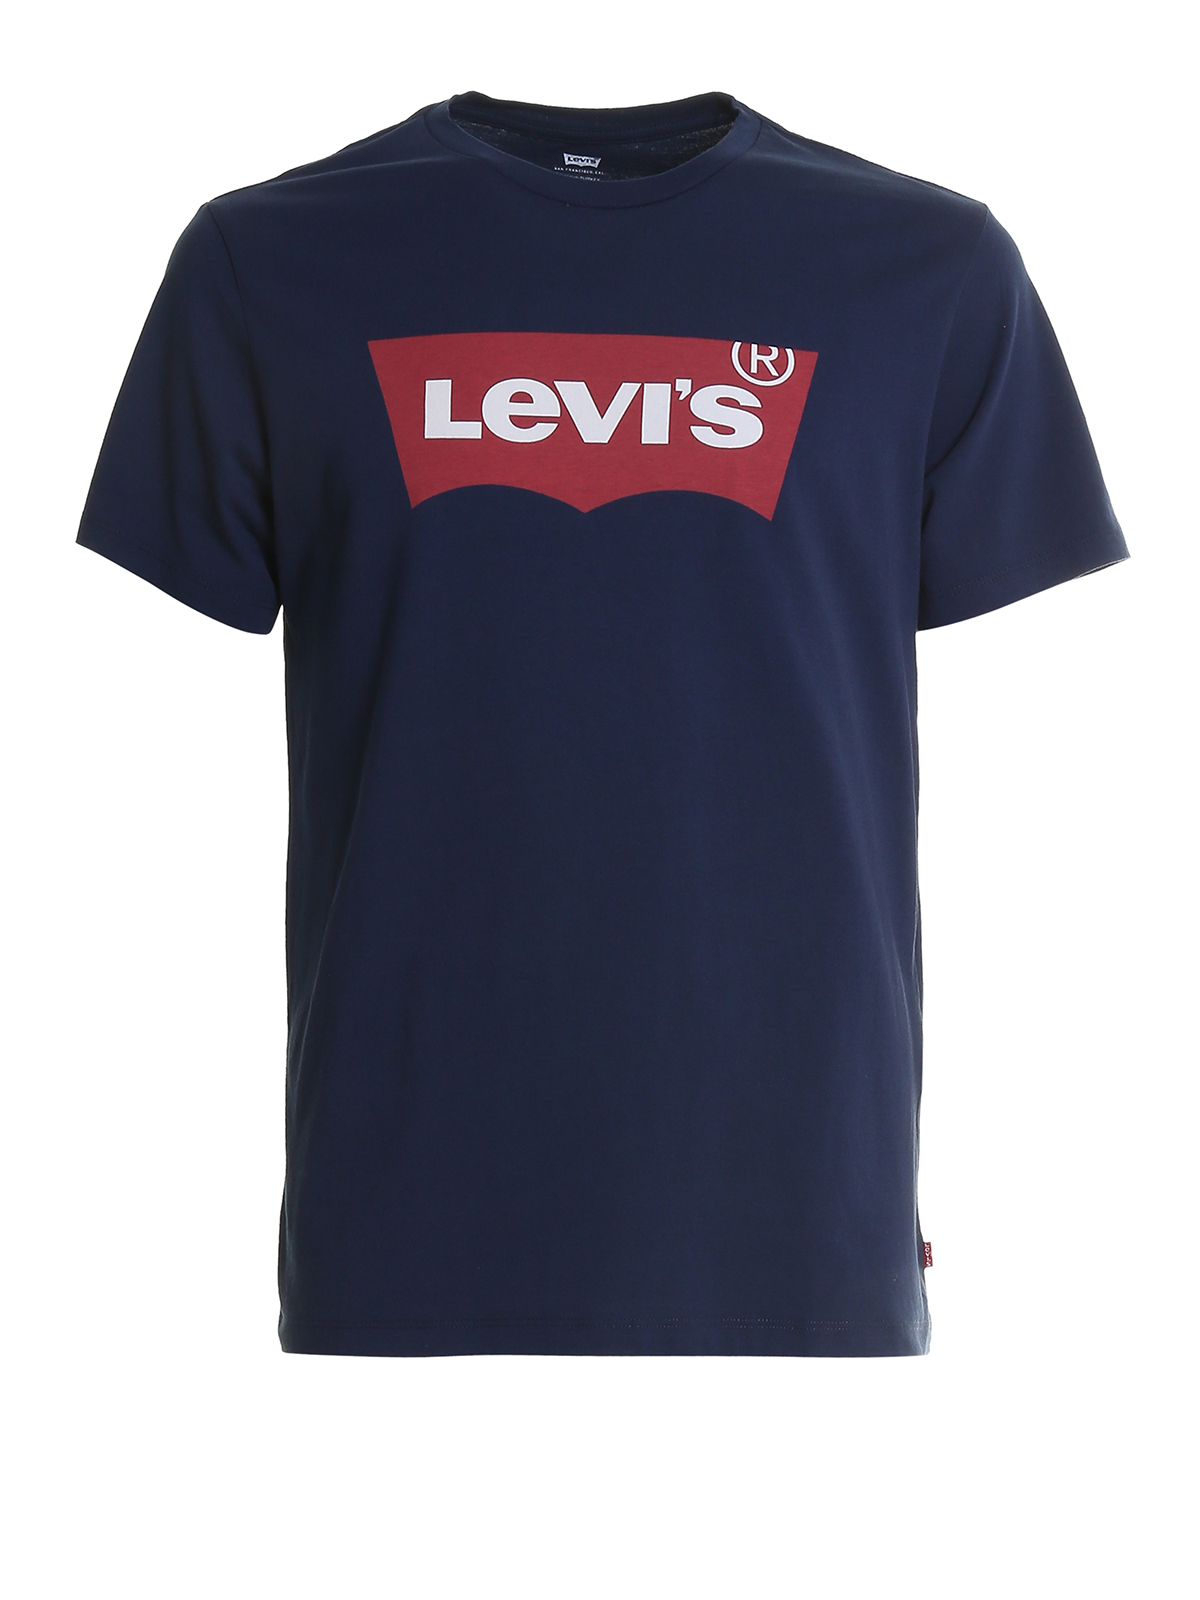 levis blue shirt